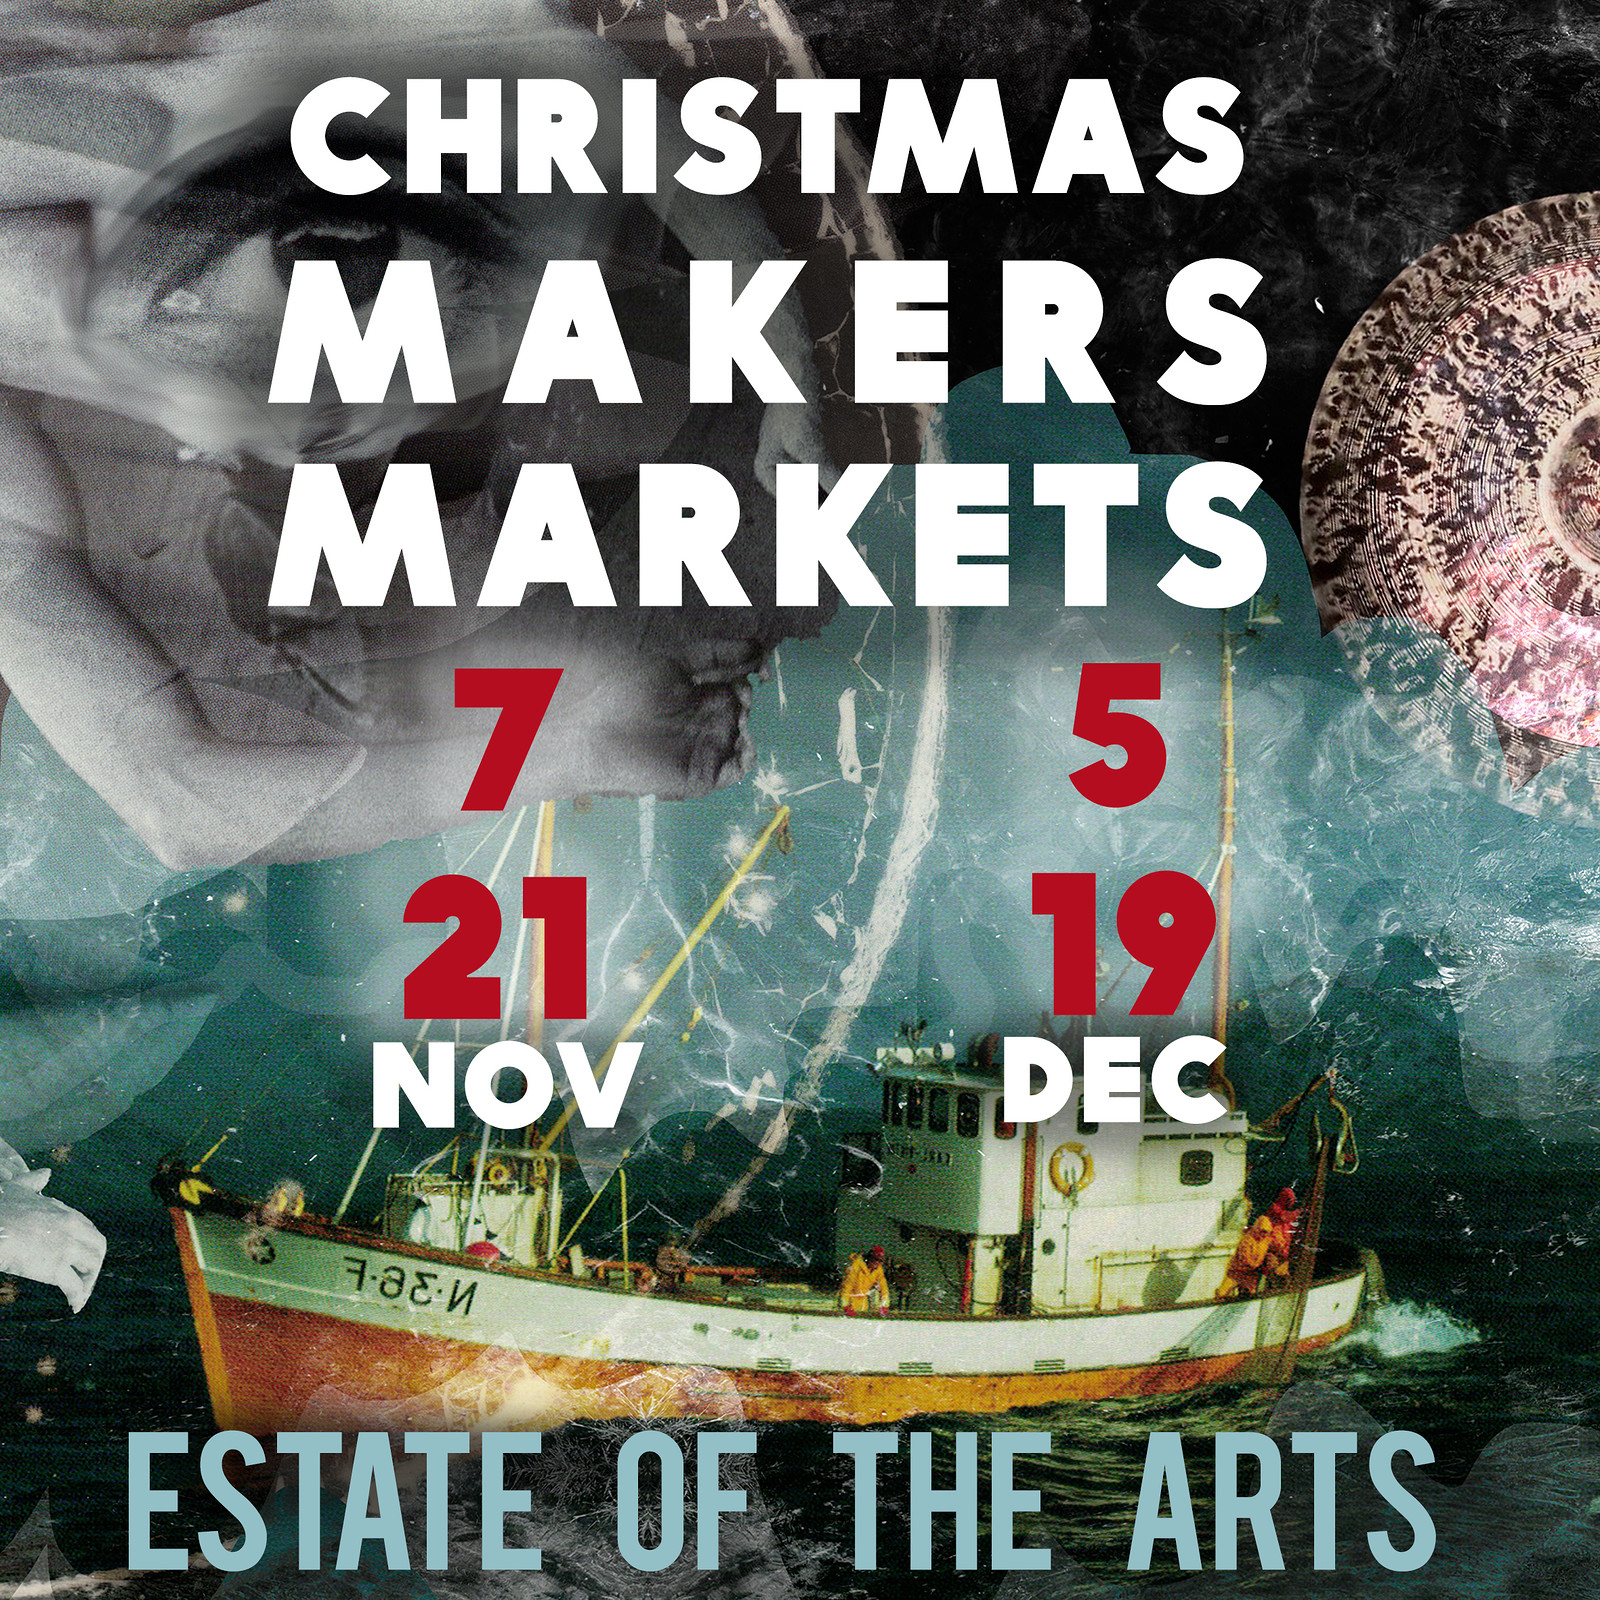 Christmas Makers Markets - VIRTUAL at Estate of the Arts